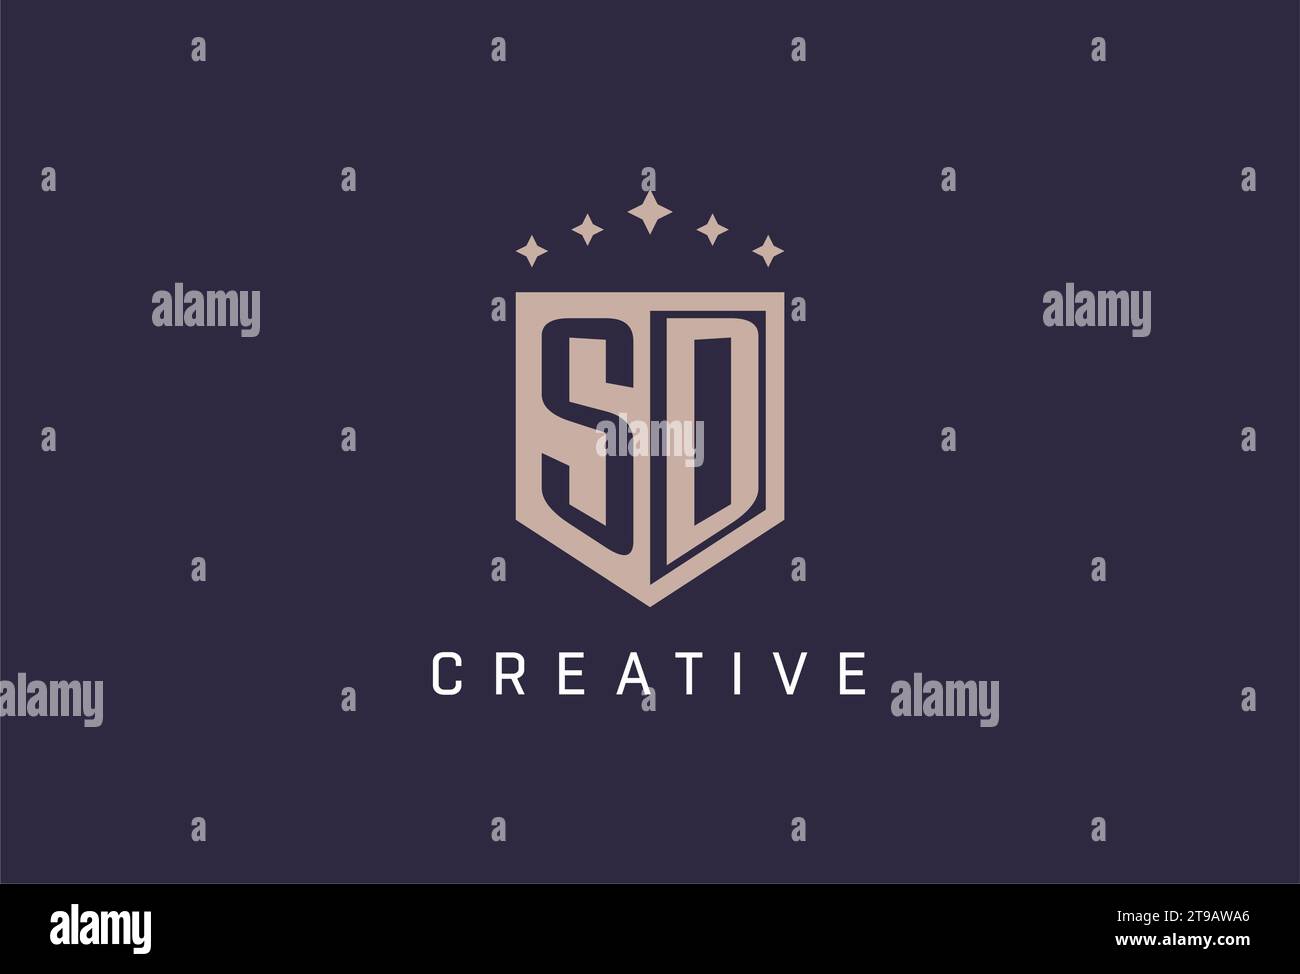 SD initial shield logo icon geometric style design inspiration Stock Vector